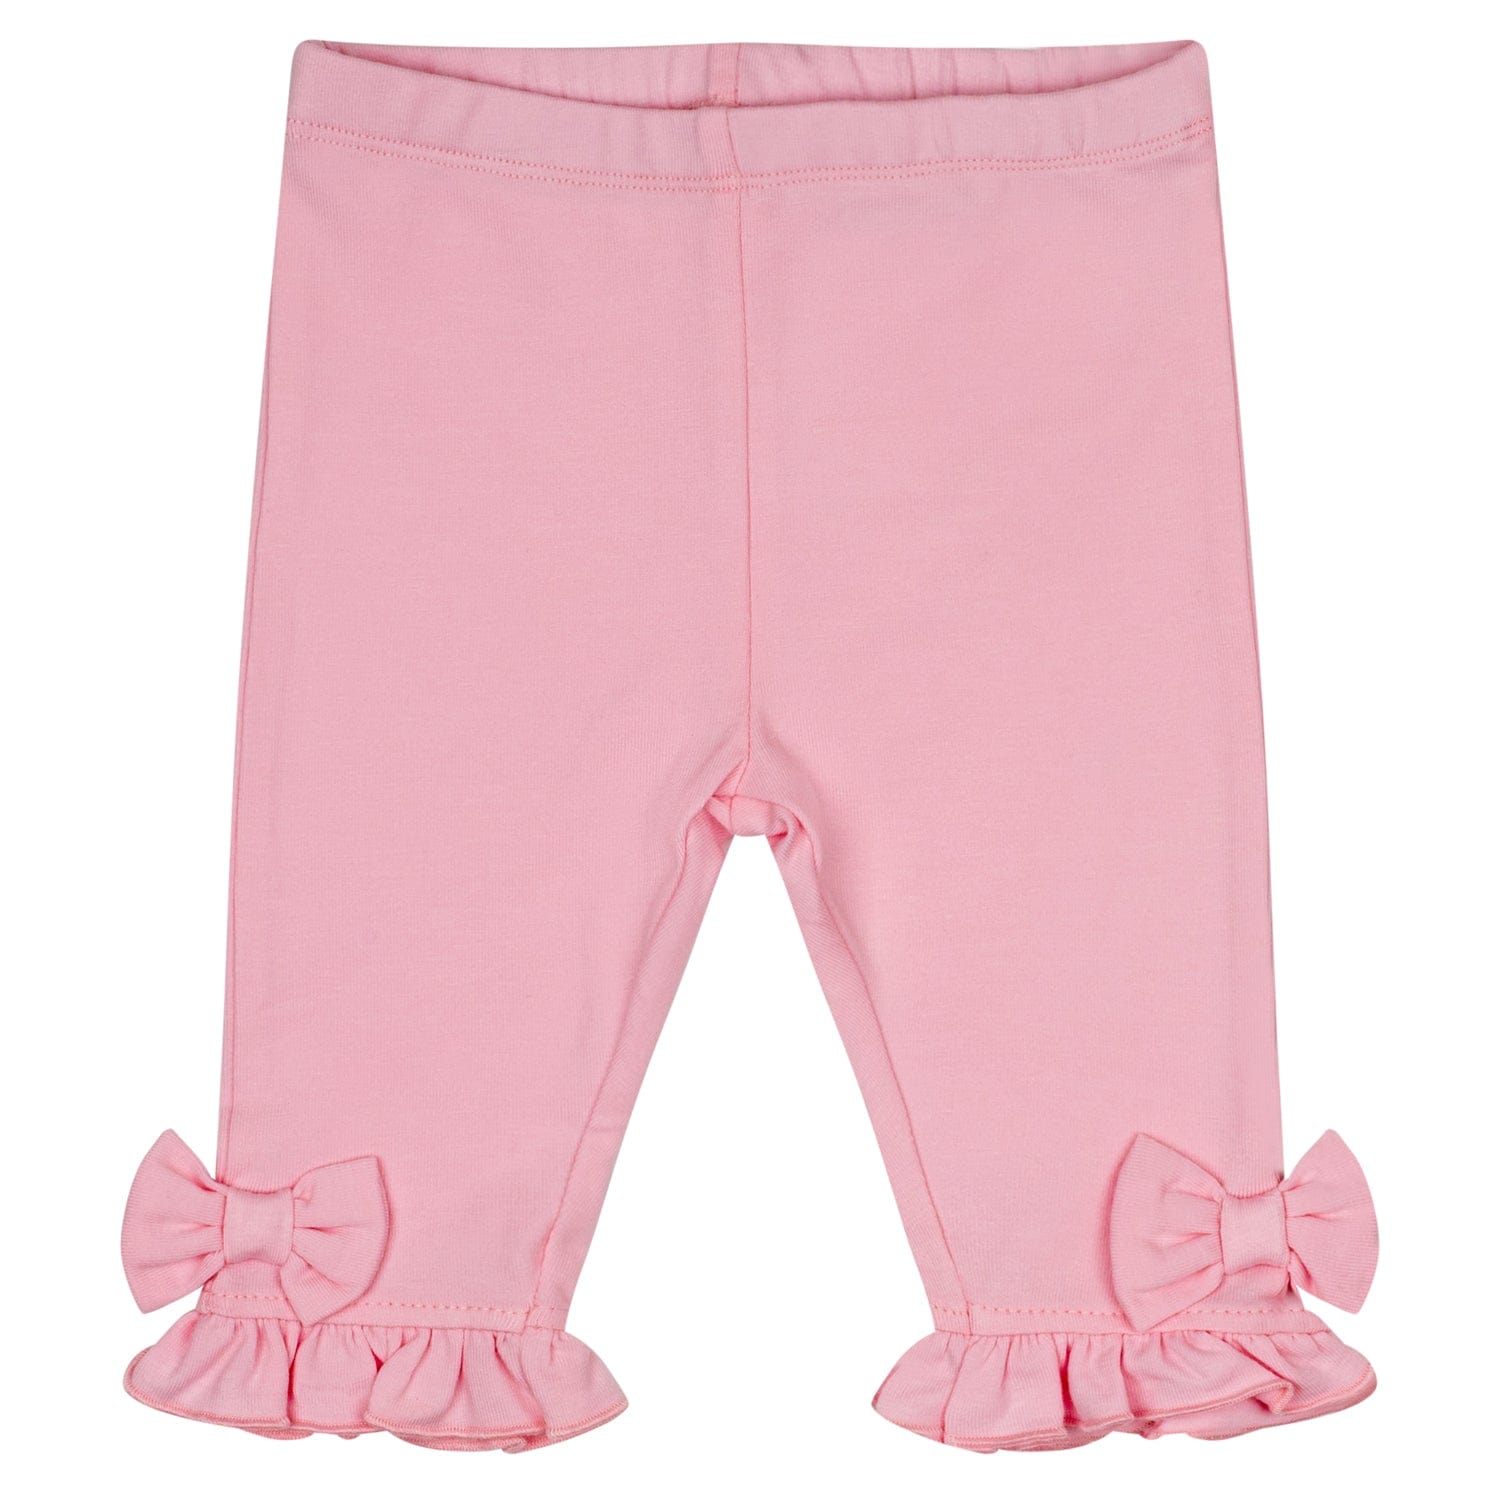 LITTLE A - Jackie Pastel Hearts Frill Legging Set - Pink